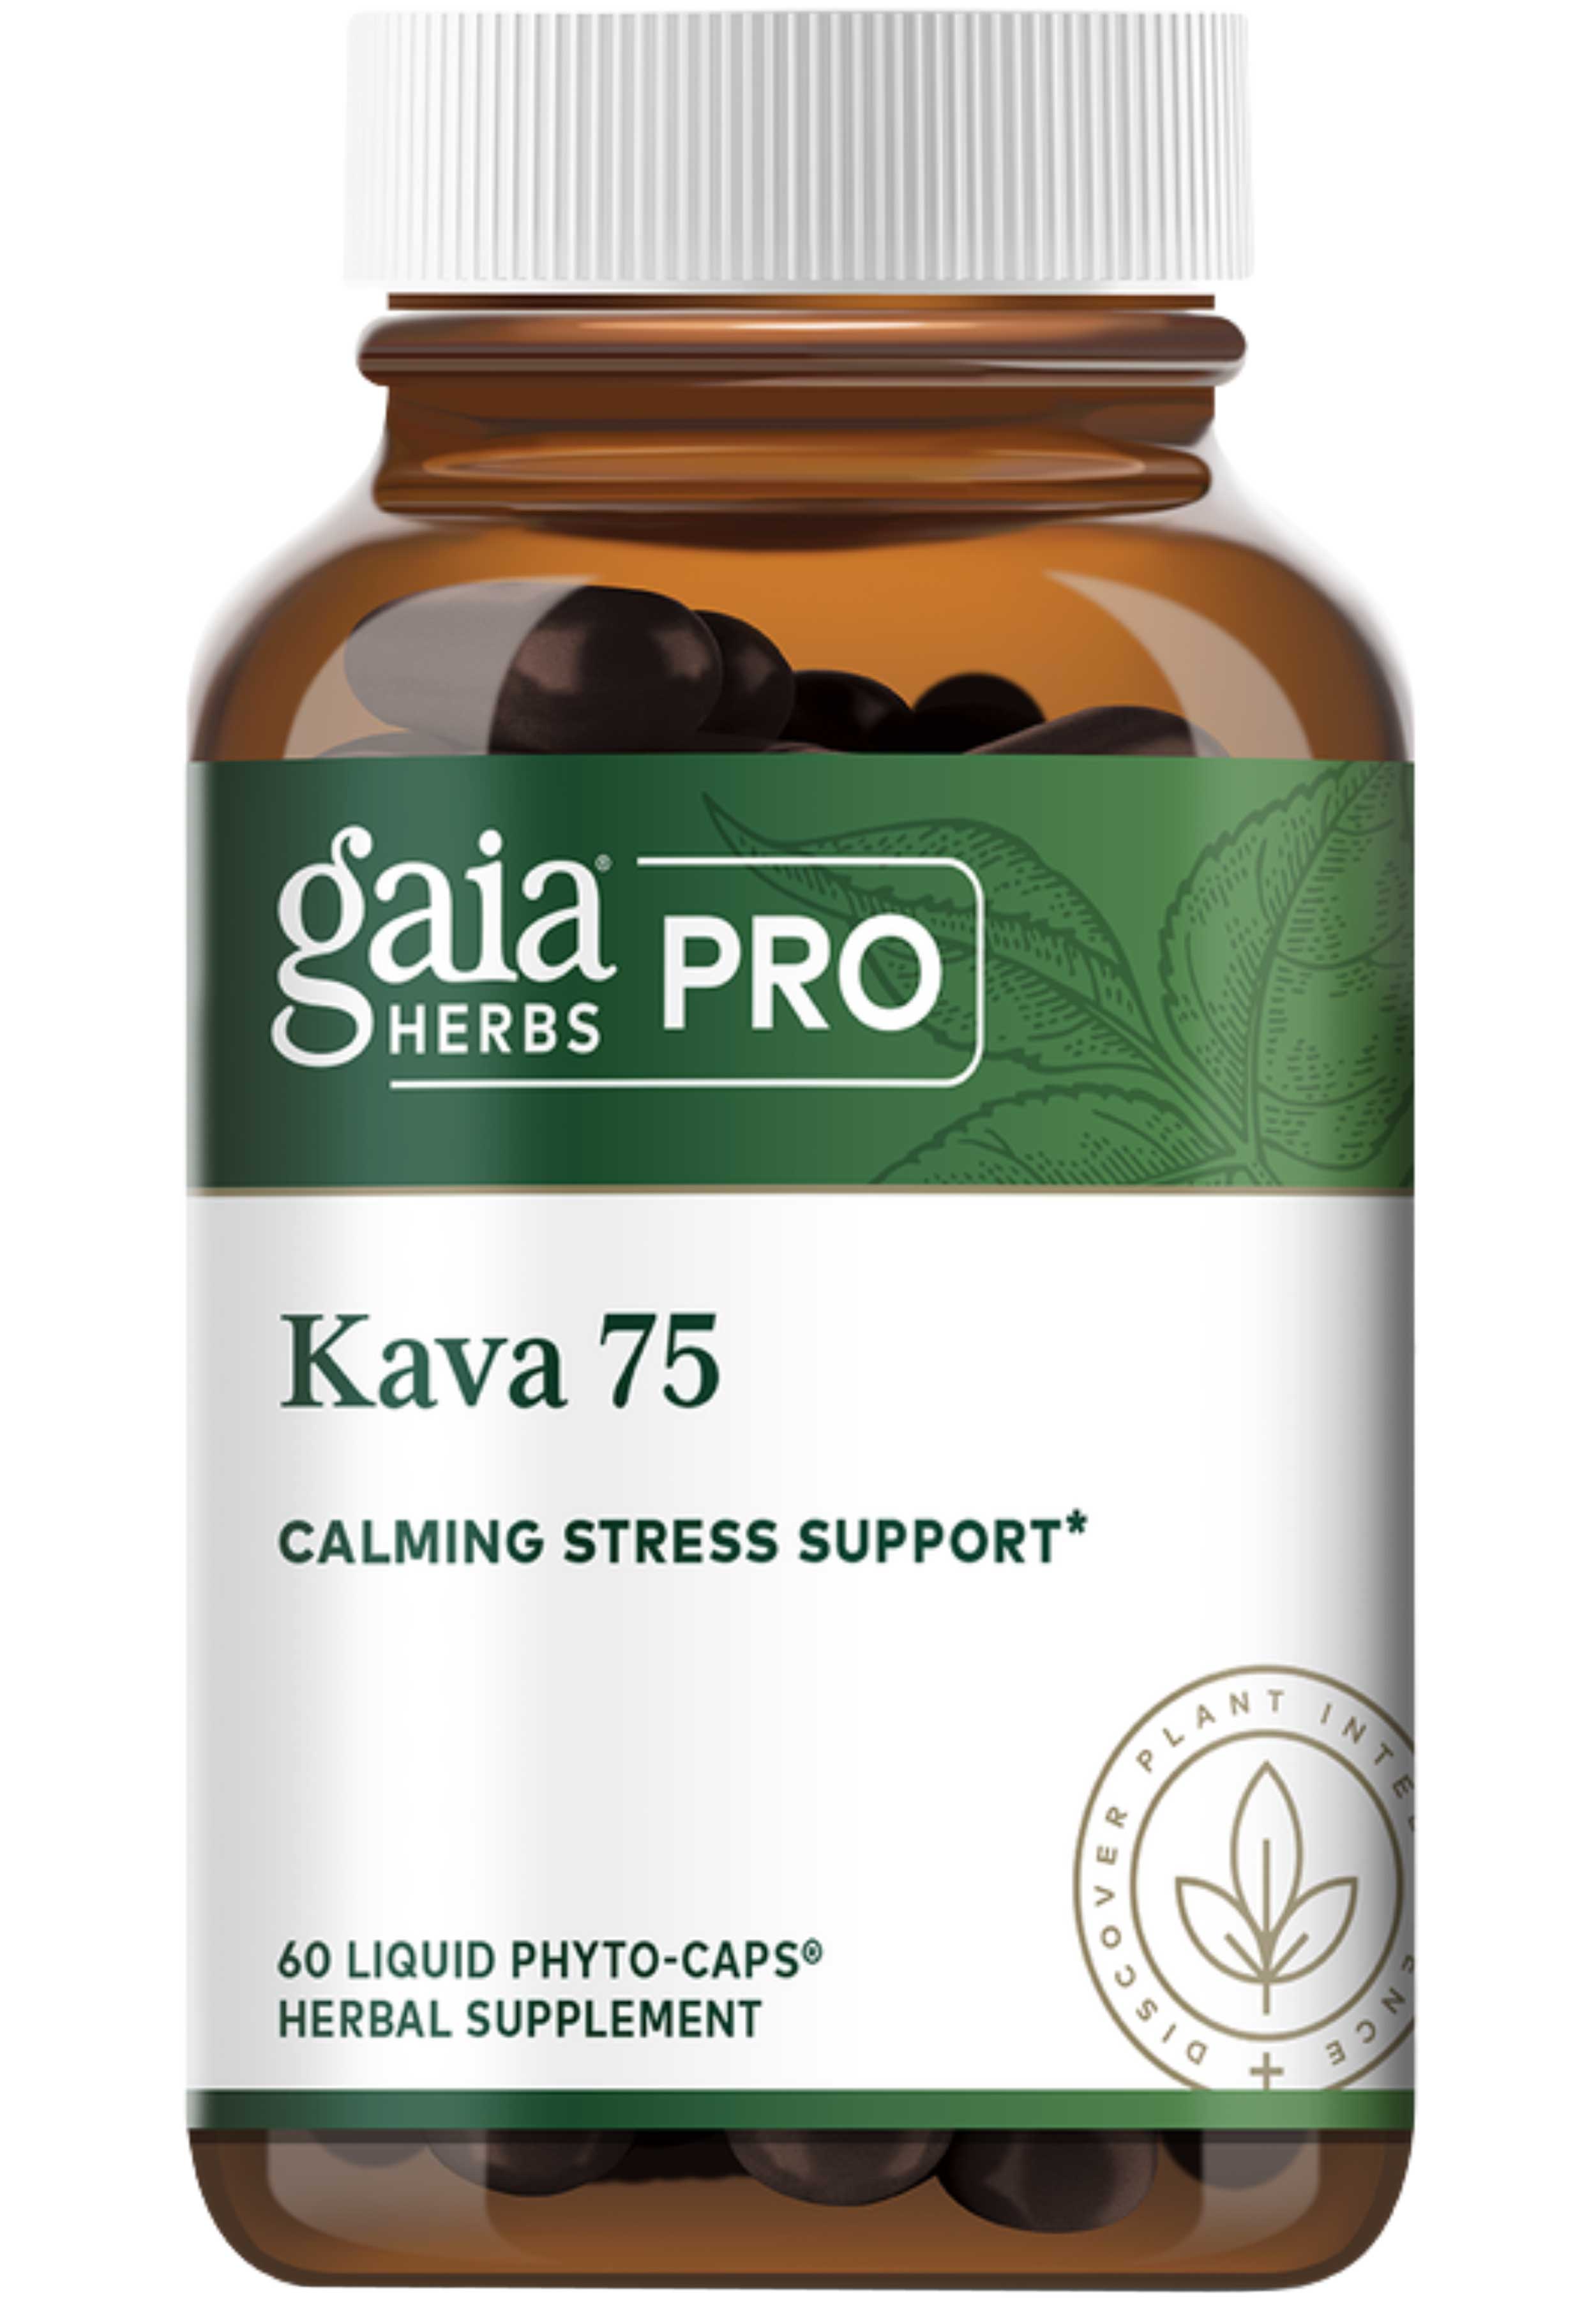 Gaia Herbs Professional Solutions Kava 75 (Formerly Kava Kava)